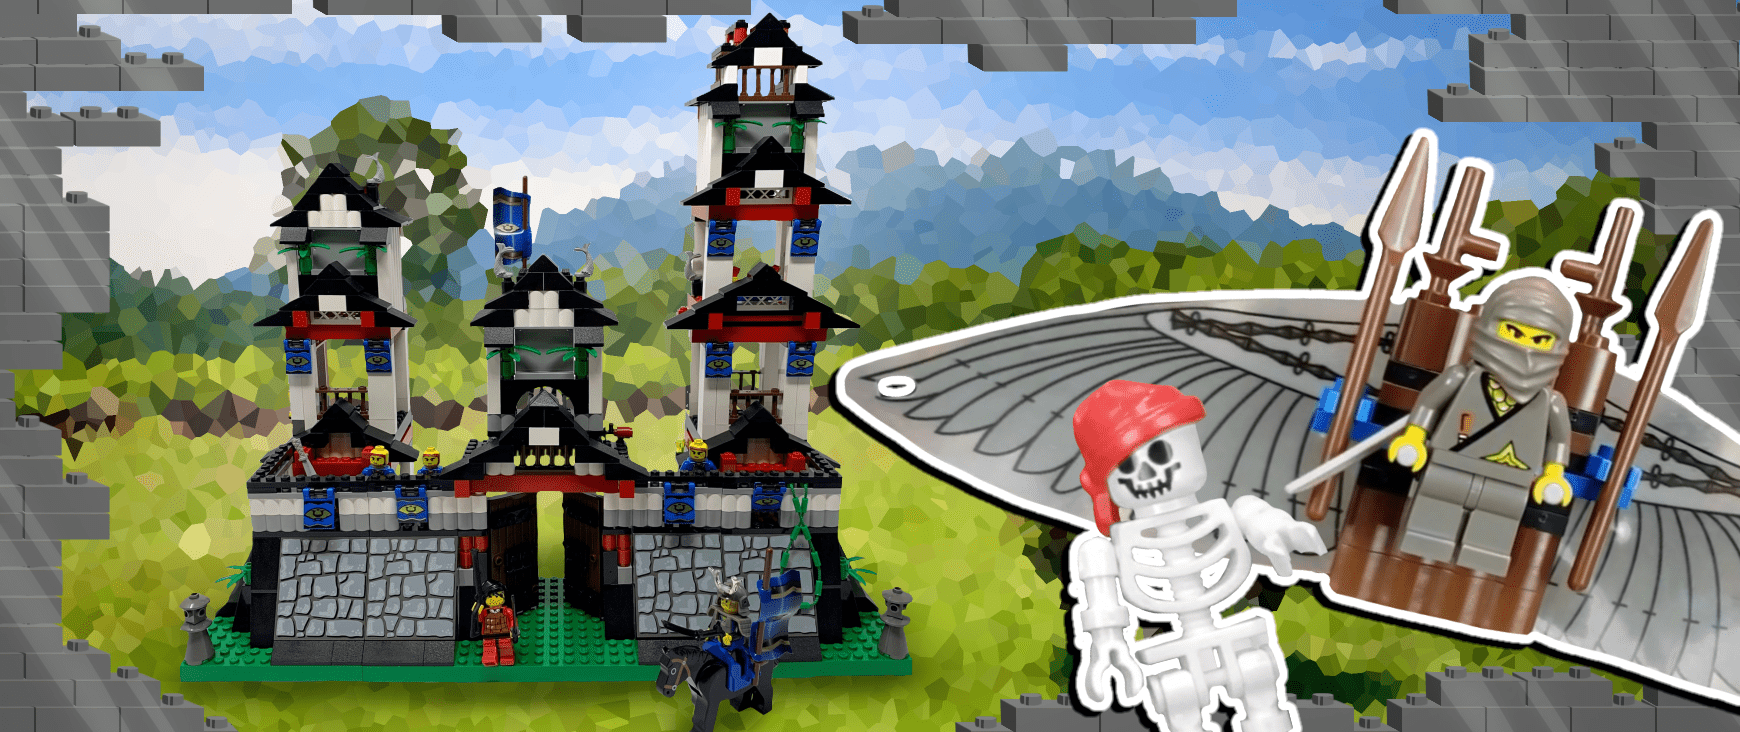 Flying Ninja Fortress Lego set from 1998